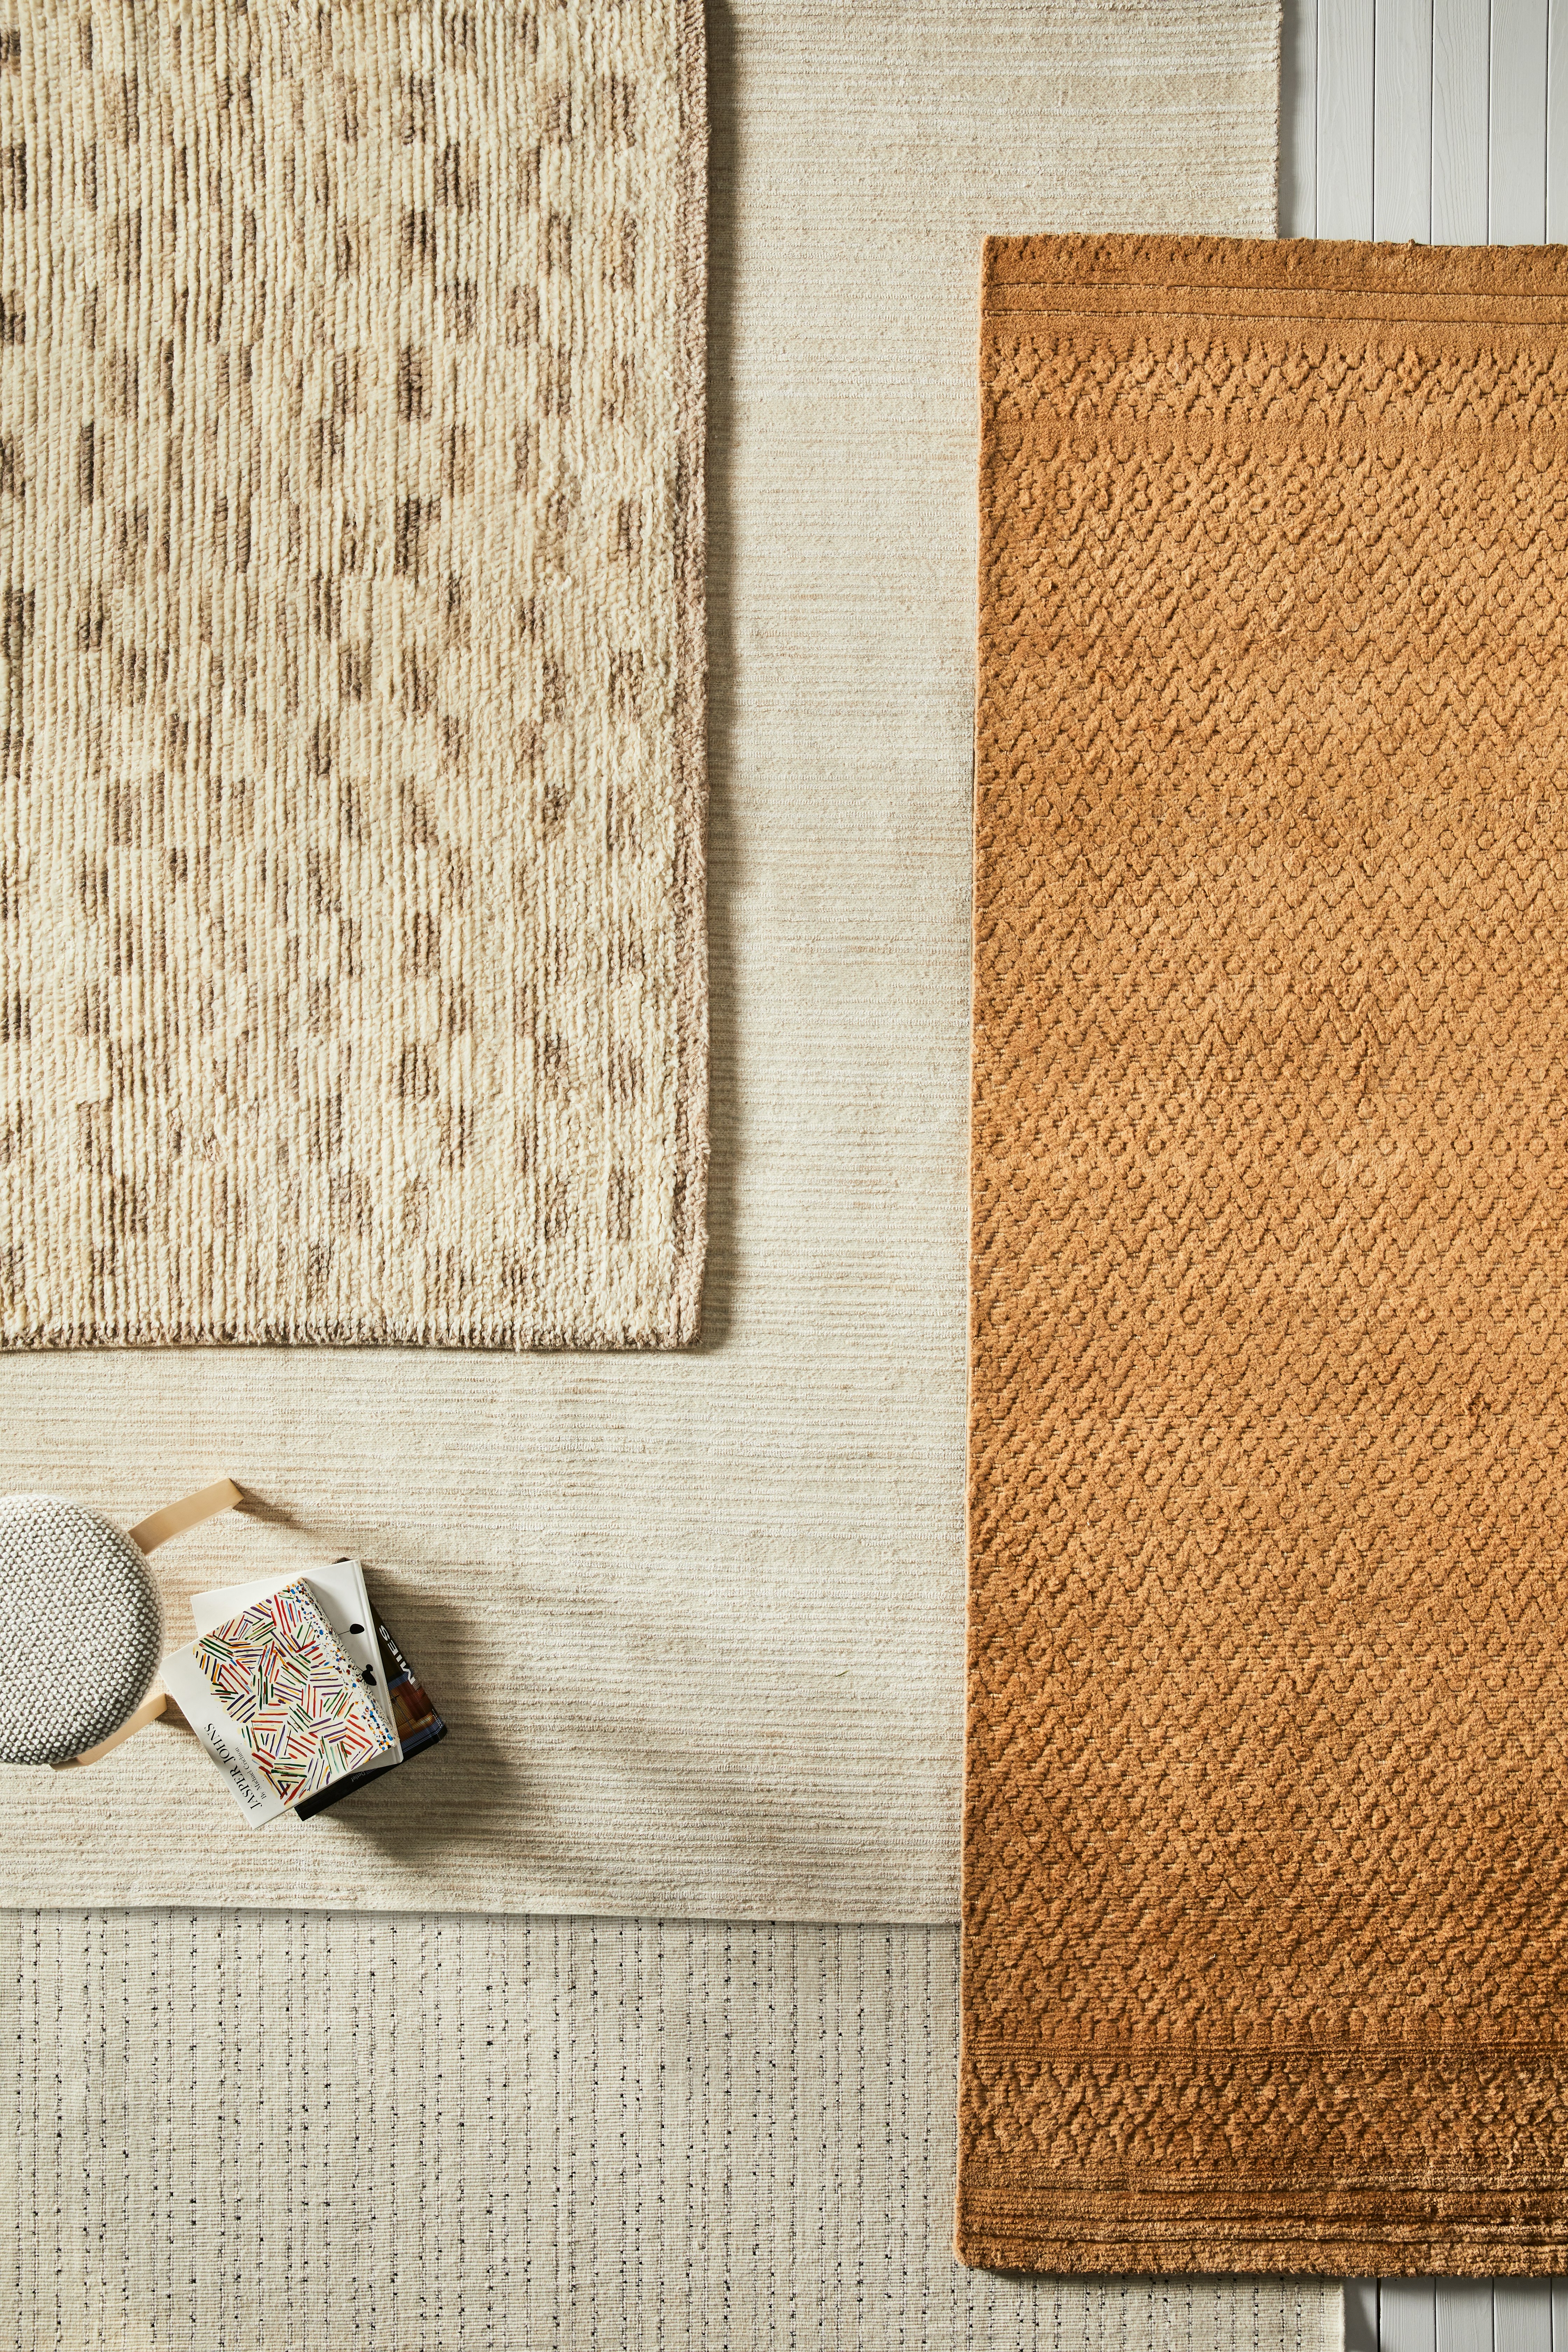 Handloom Waves Cotton & Jute Rugs Carpet Modern Designer Rug Natural Colour 